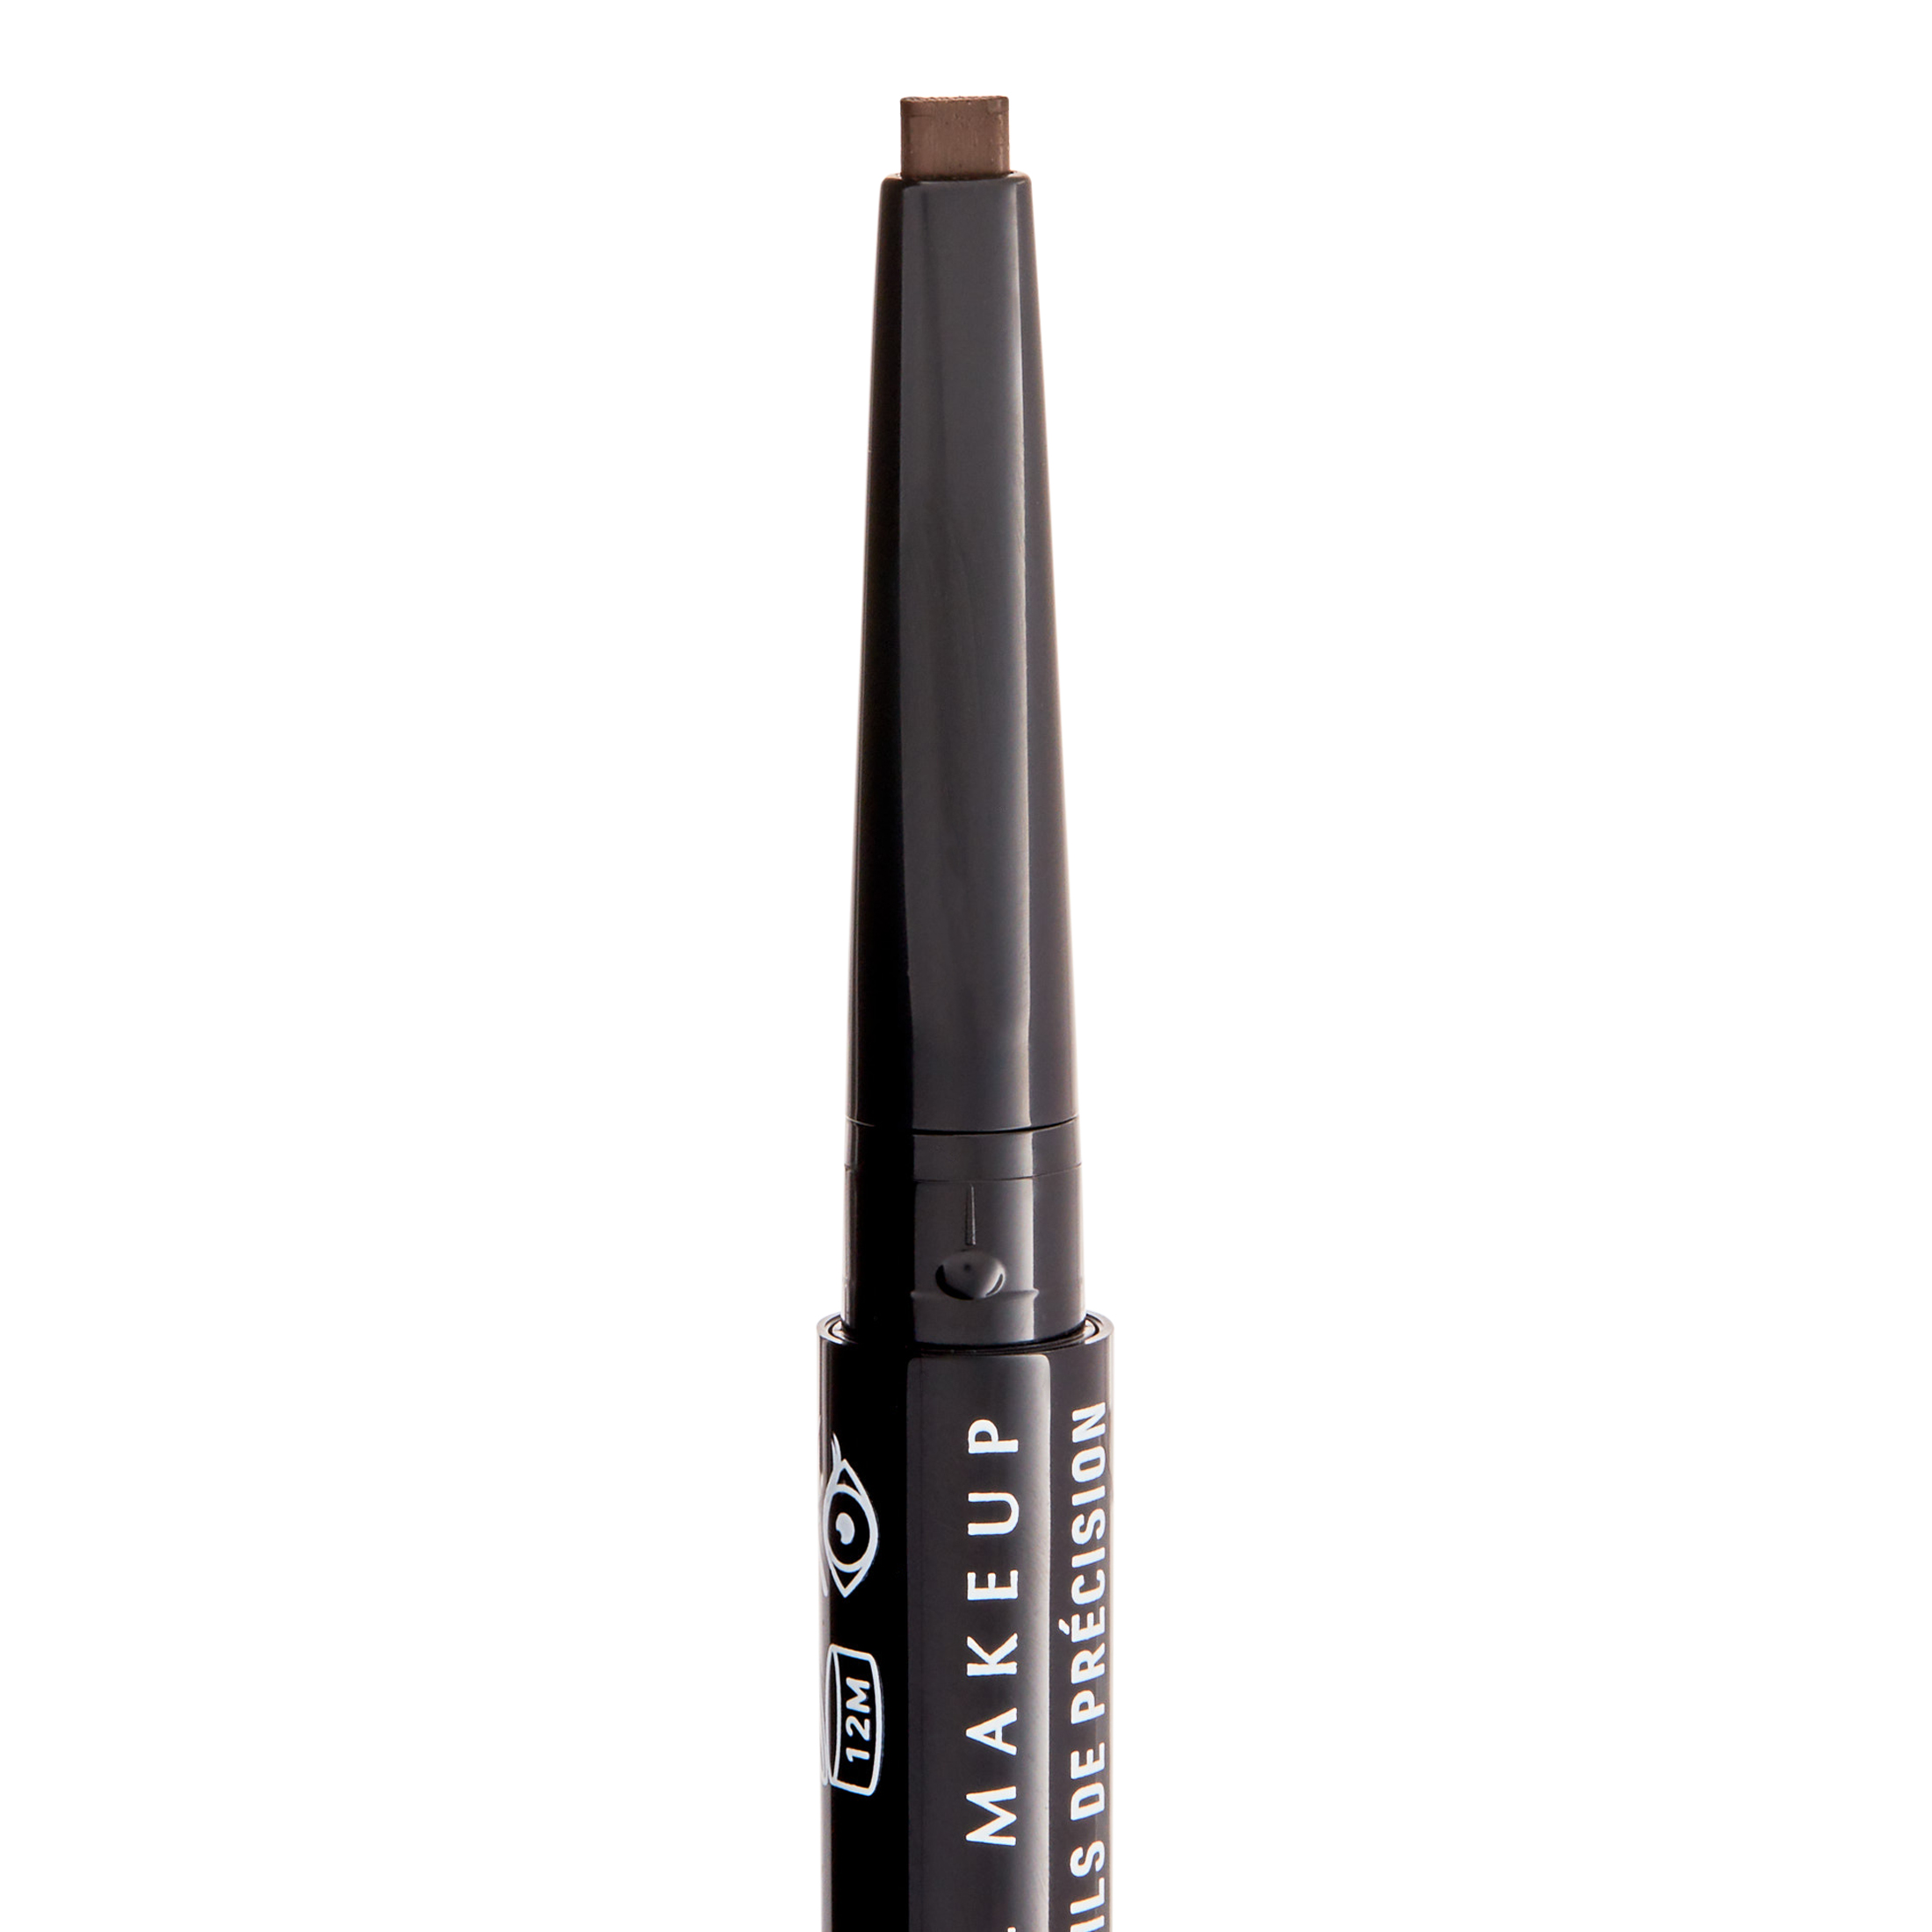 NYX Professional Makeup Precision Eyebrow Pencil, Espresso - image 9 of 12